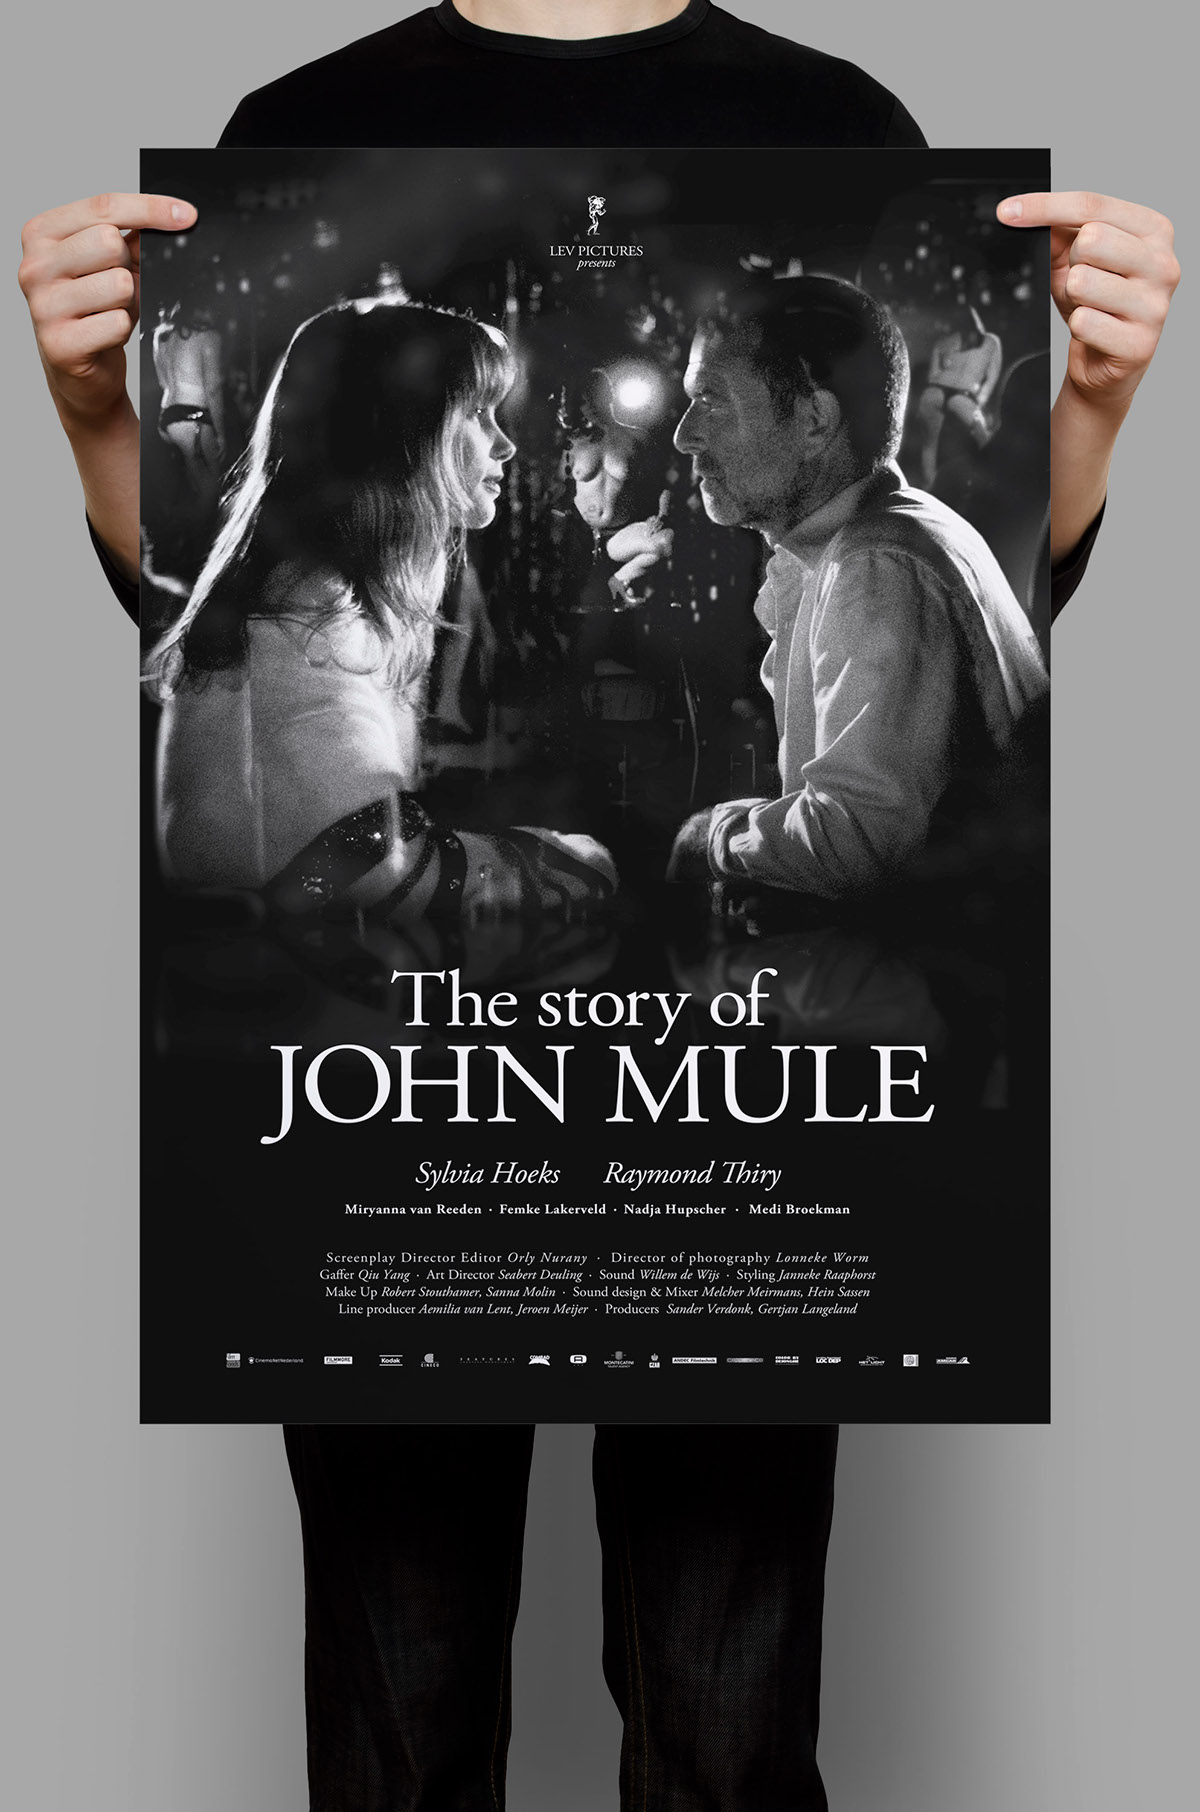 Adobe Portfolio John Mule LEV Pictures poster DVD